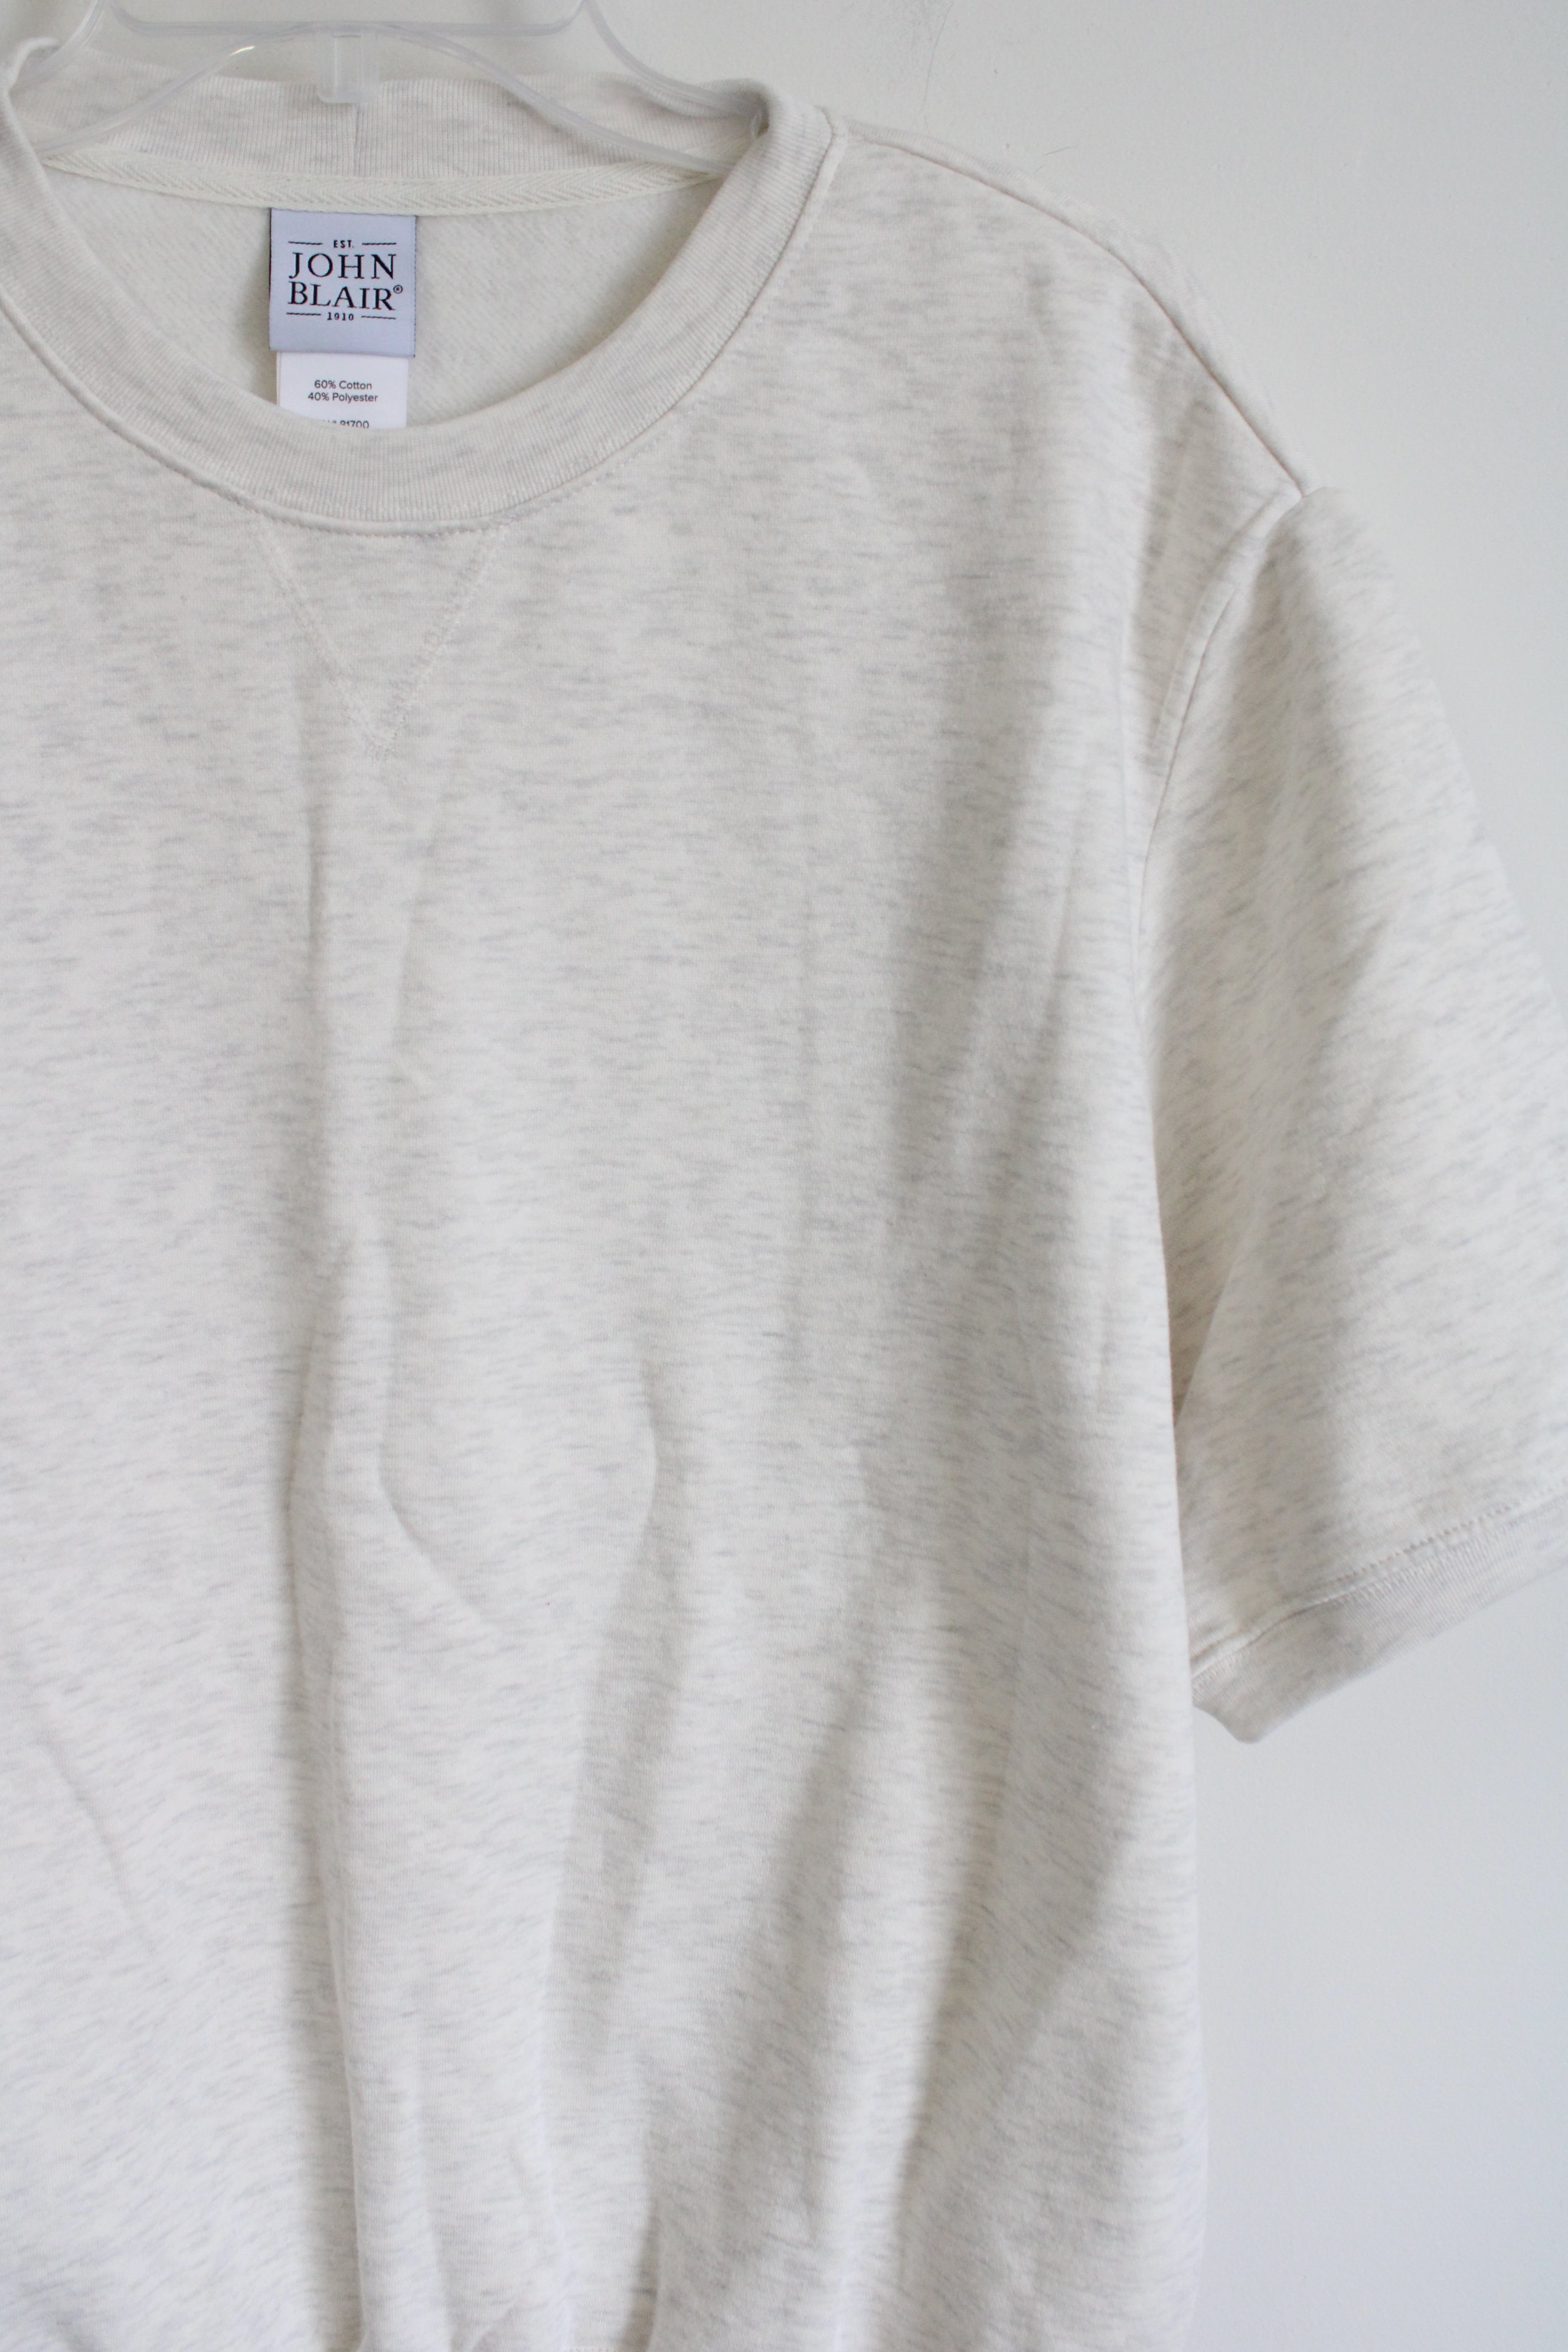 John Blair Cream Fleece Lined Short Sleeved Sweatshirt | L